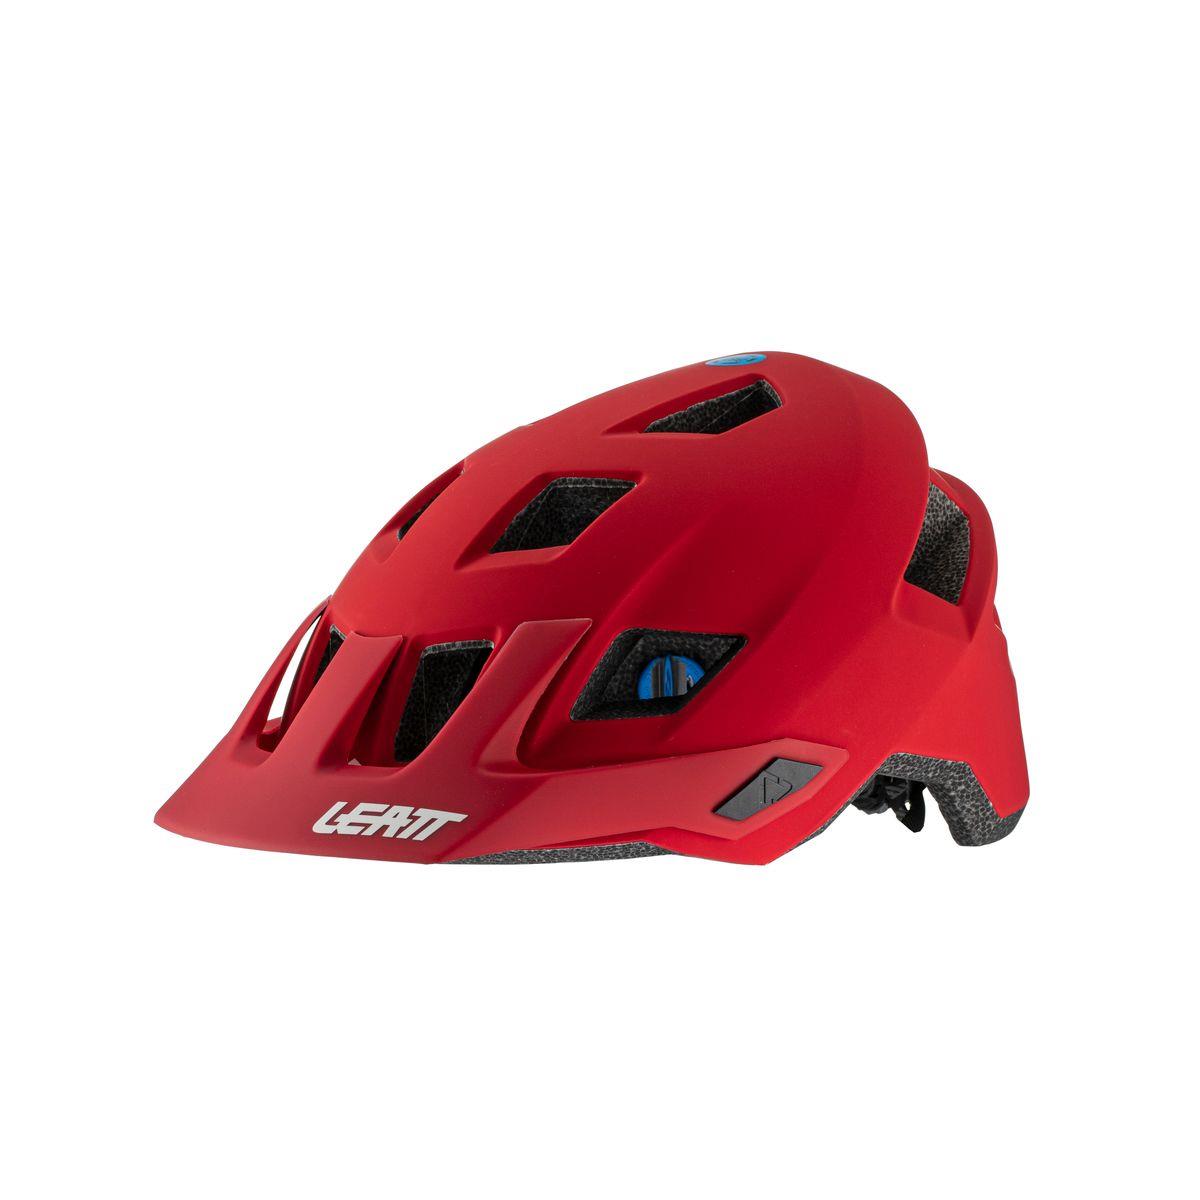 Helmet MTB 1.0 Turbine Technology Red Size S (51-55cm)